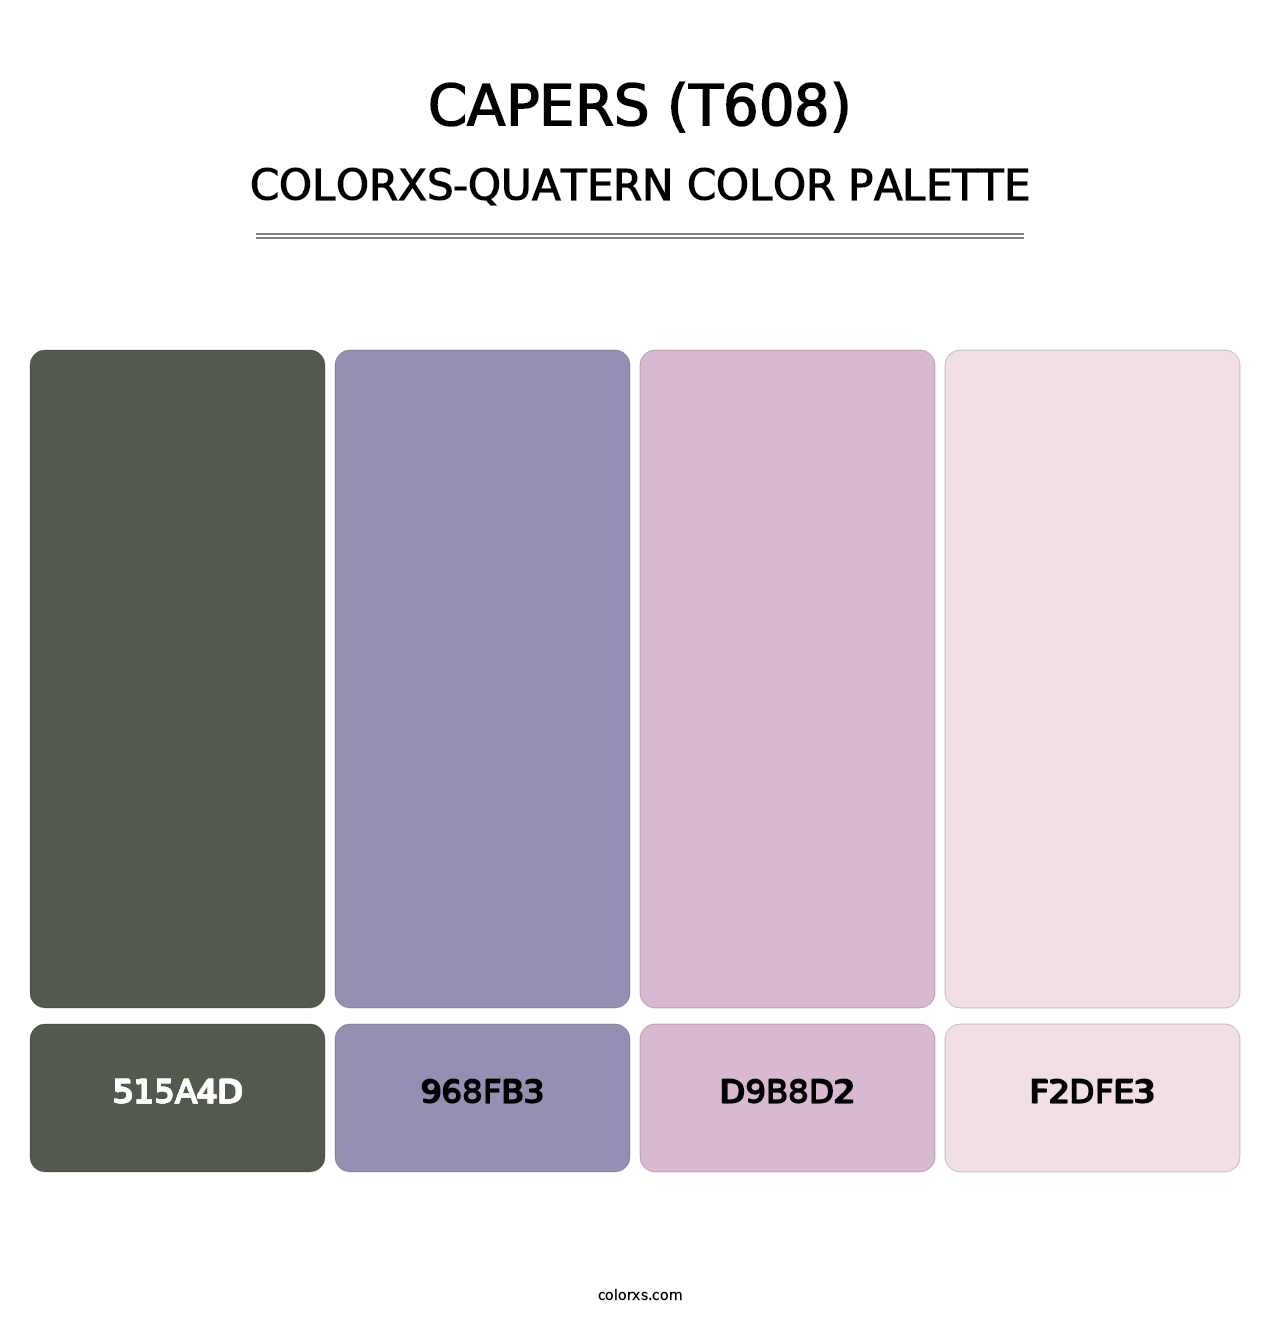 Capers (T608) - Colorxs Quatern Palette